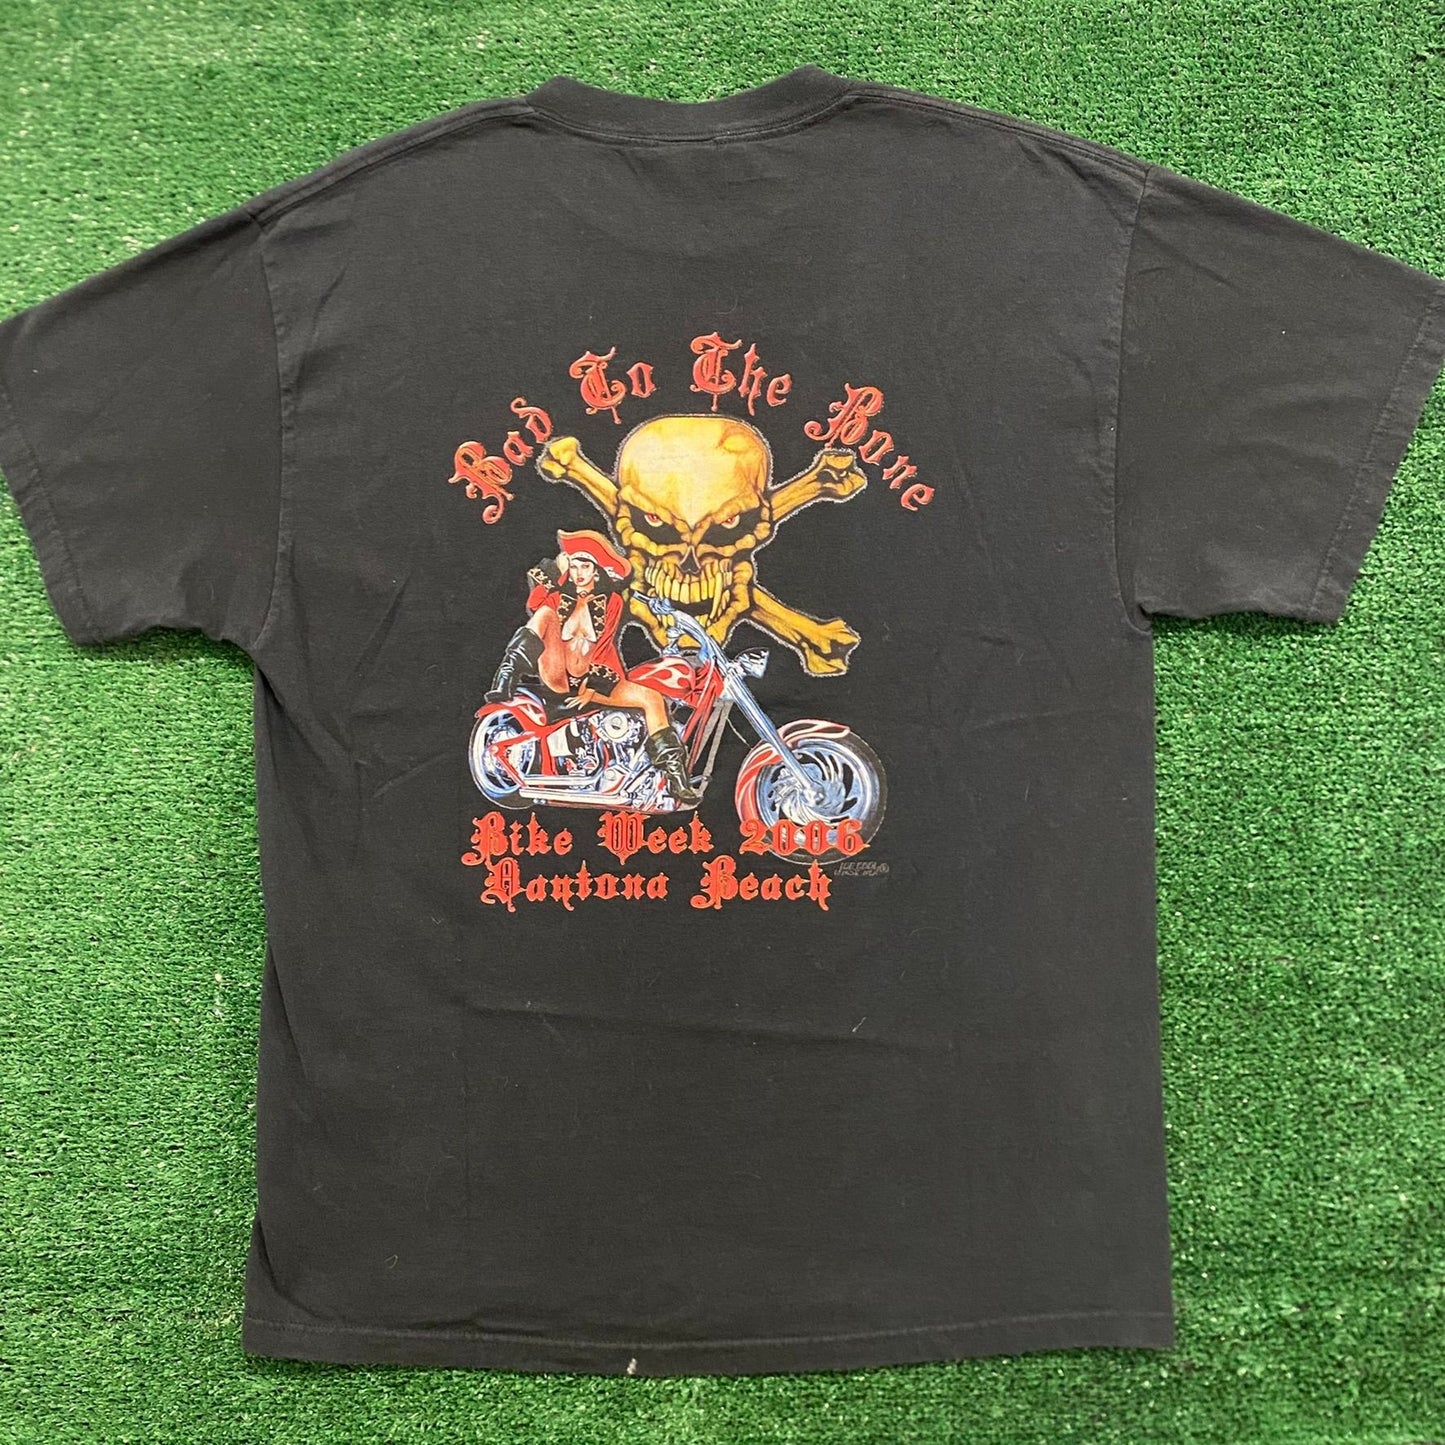 Daytona Bike Week Skull Pirate Vintage Biker T-Shirt